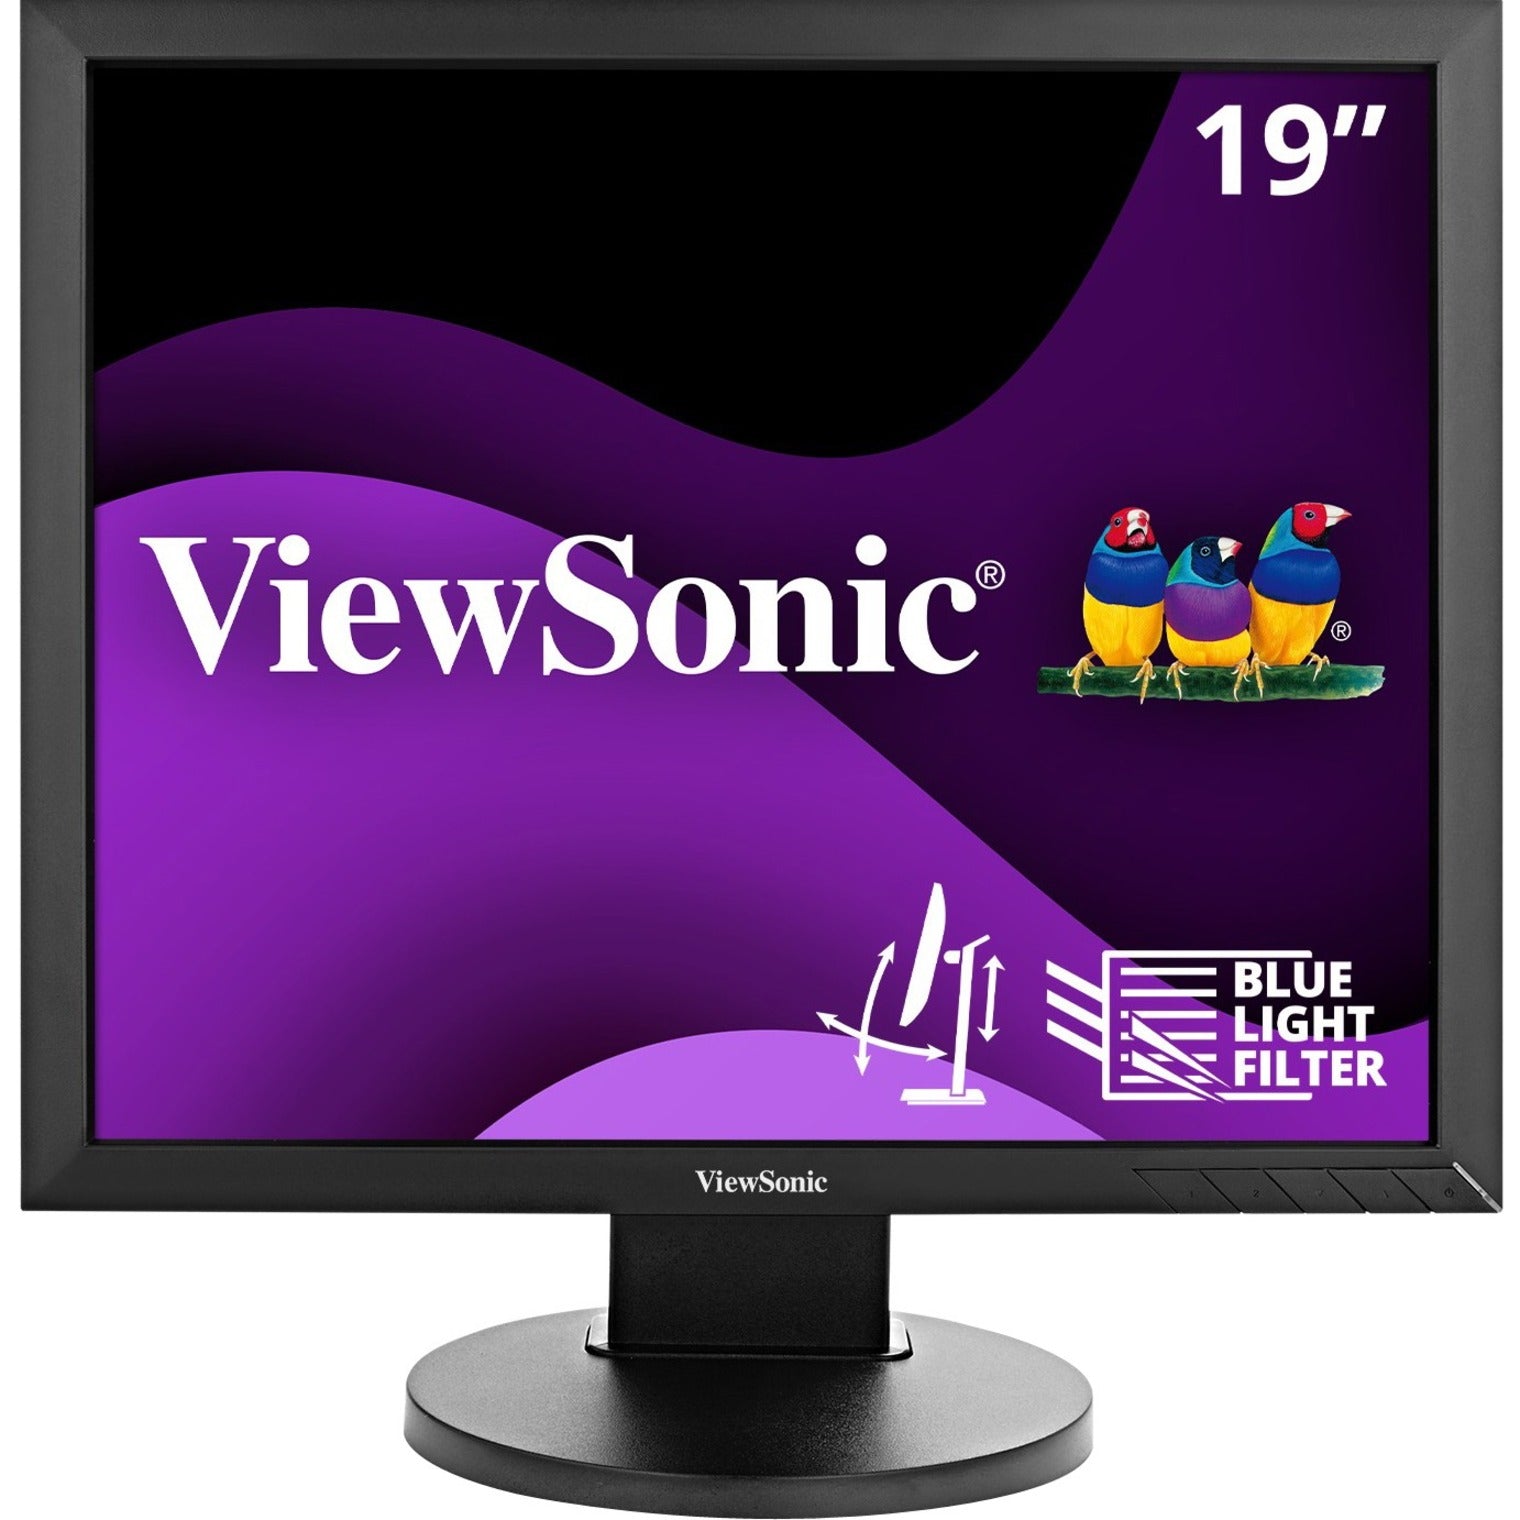 ViewSonic VG939SM VG939Sm LCD Monitor, 19" Fully Ergonomic, 1280x1024, 3 Year Warranty, USB Hub, Eco Mode